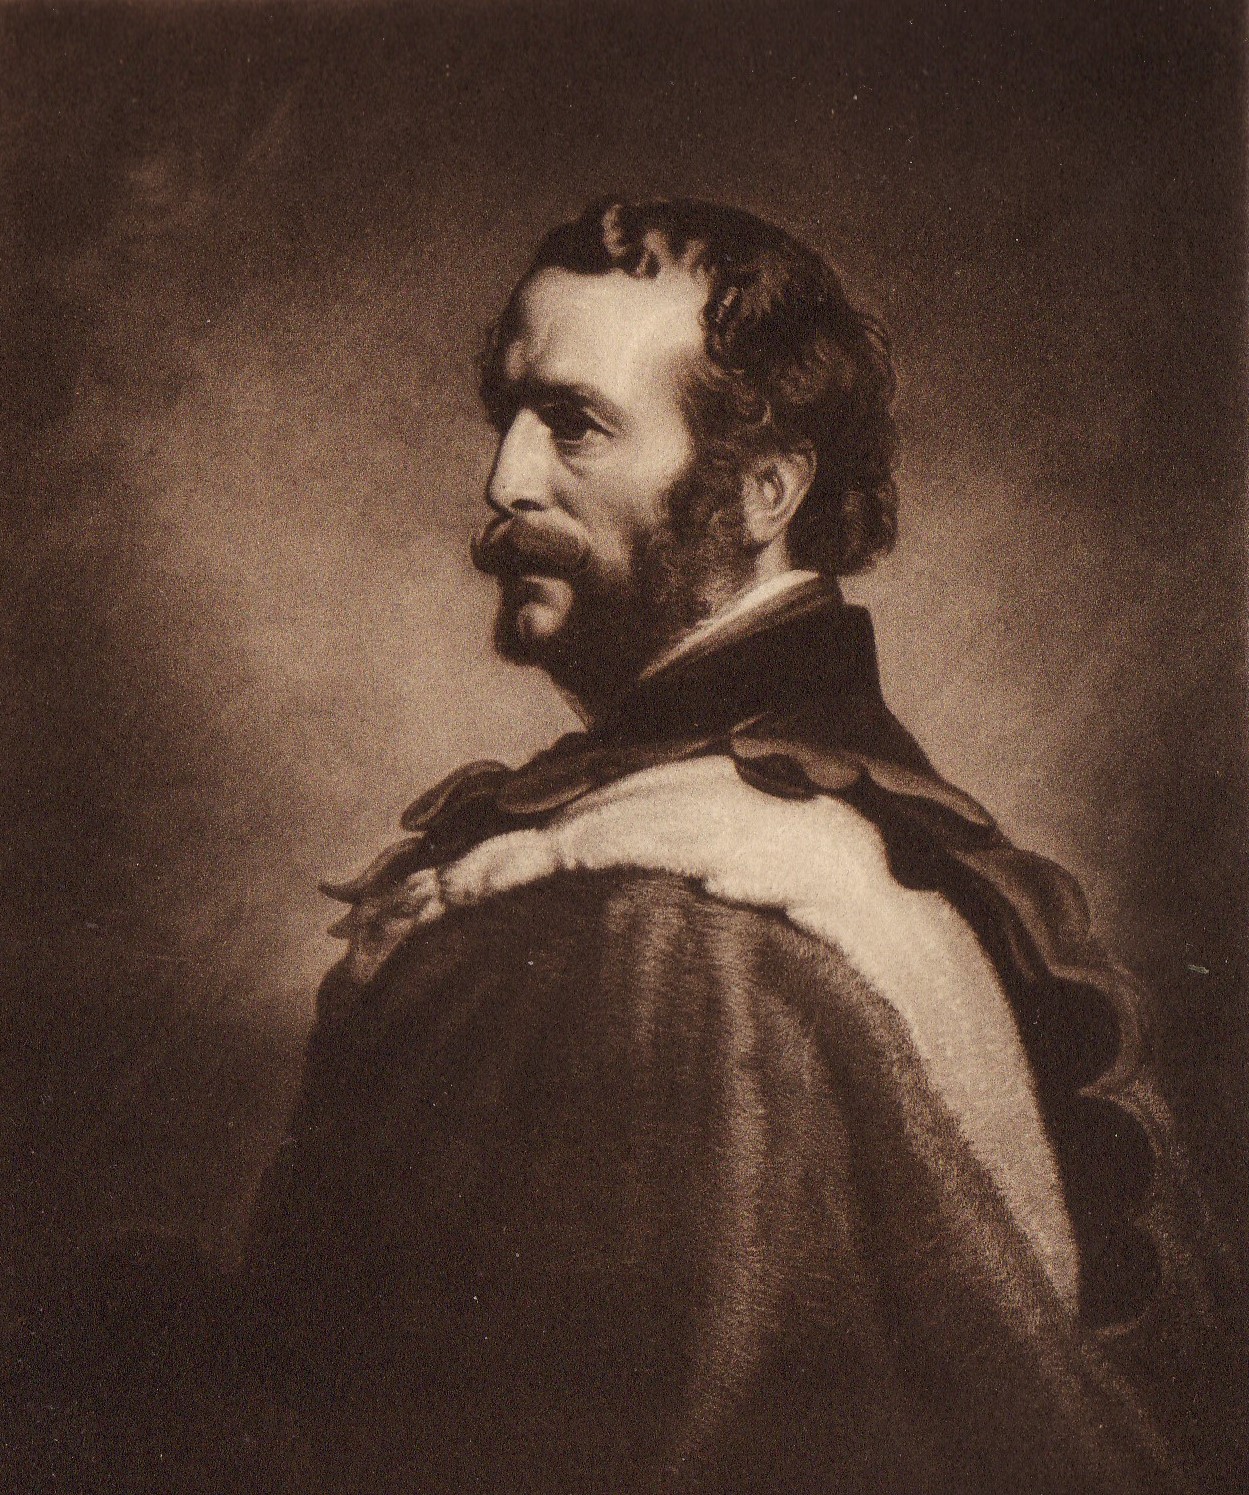 A Portrait of John Rae by Stephen Pearce, 1862